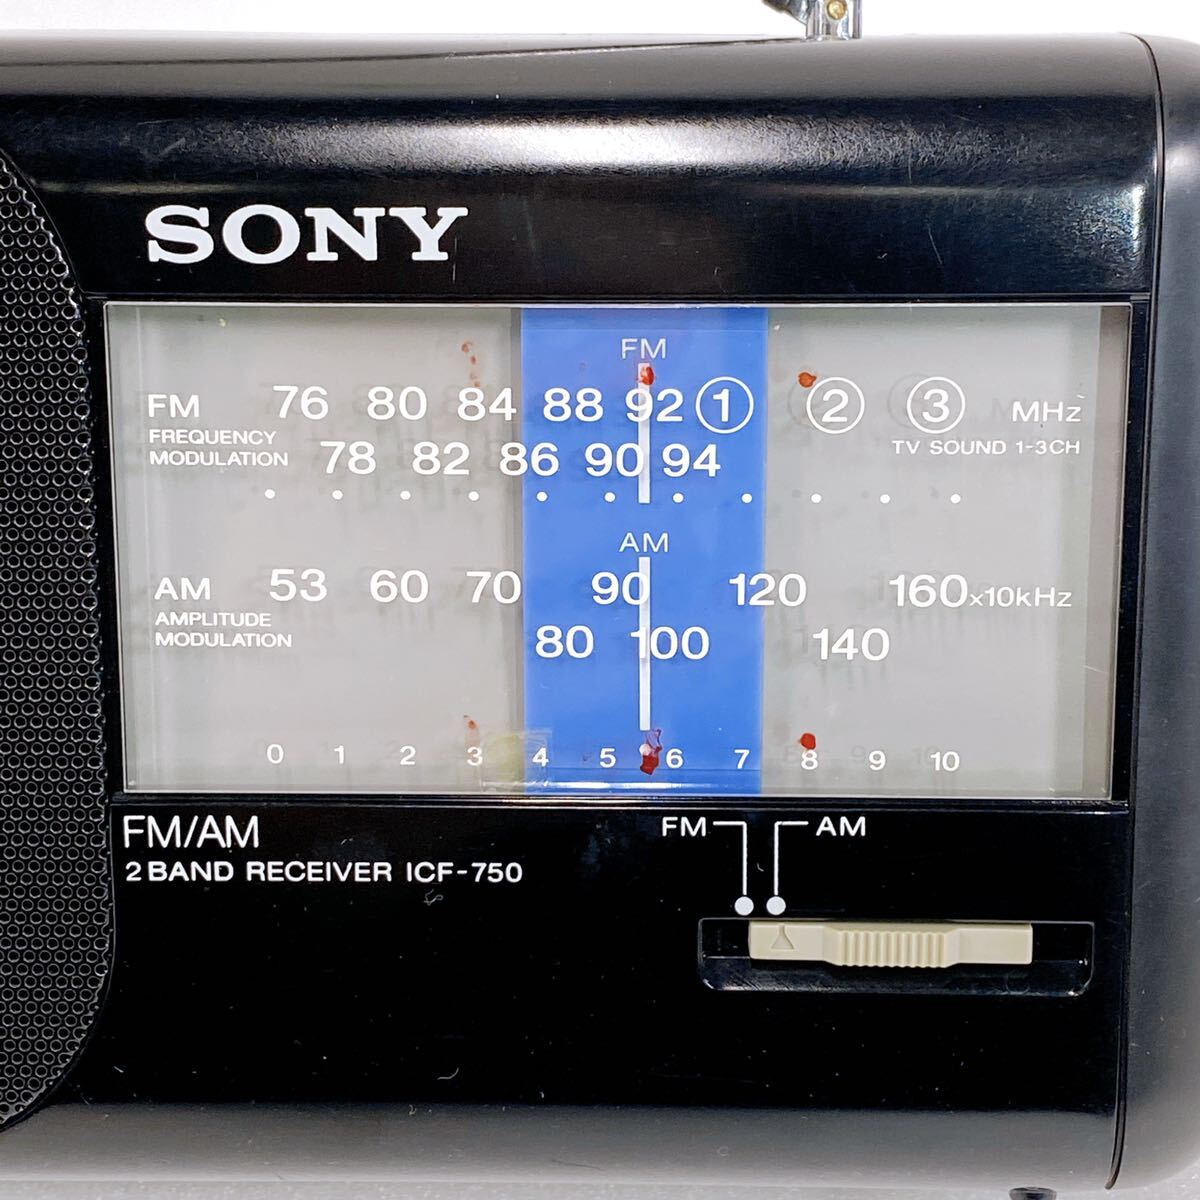 SONY Sony ICF-750 FM/AM 2BAND RECEIVER radio portable radio [AM only reception verification settled / junk treatment ]